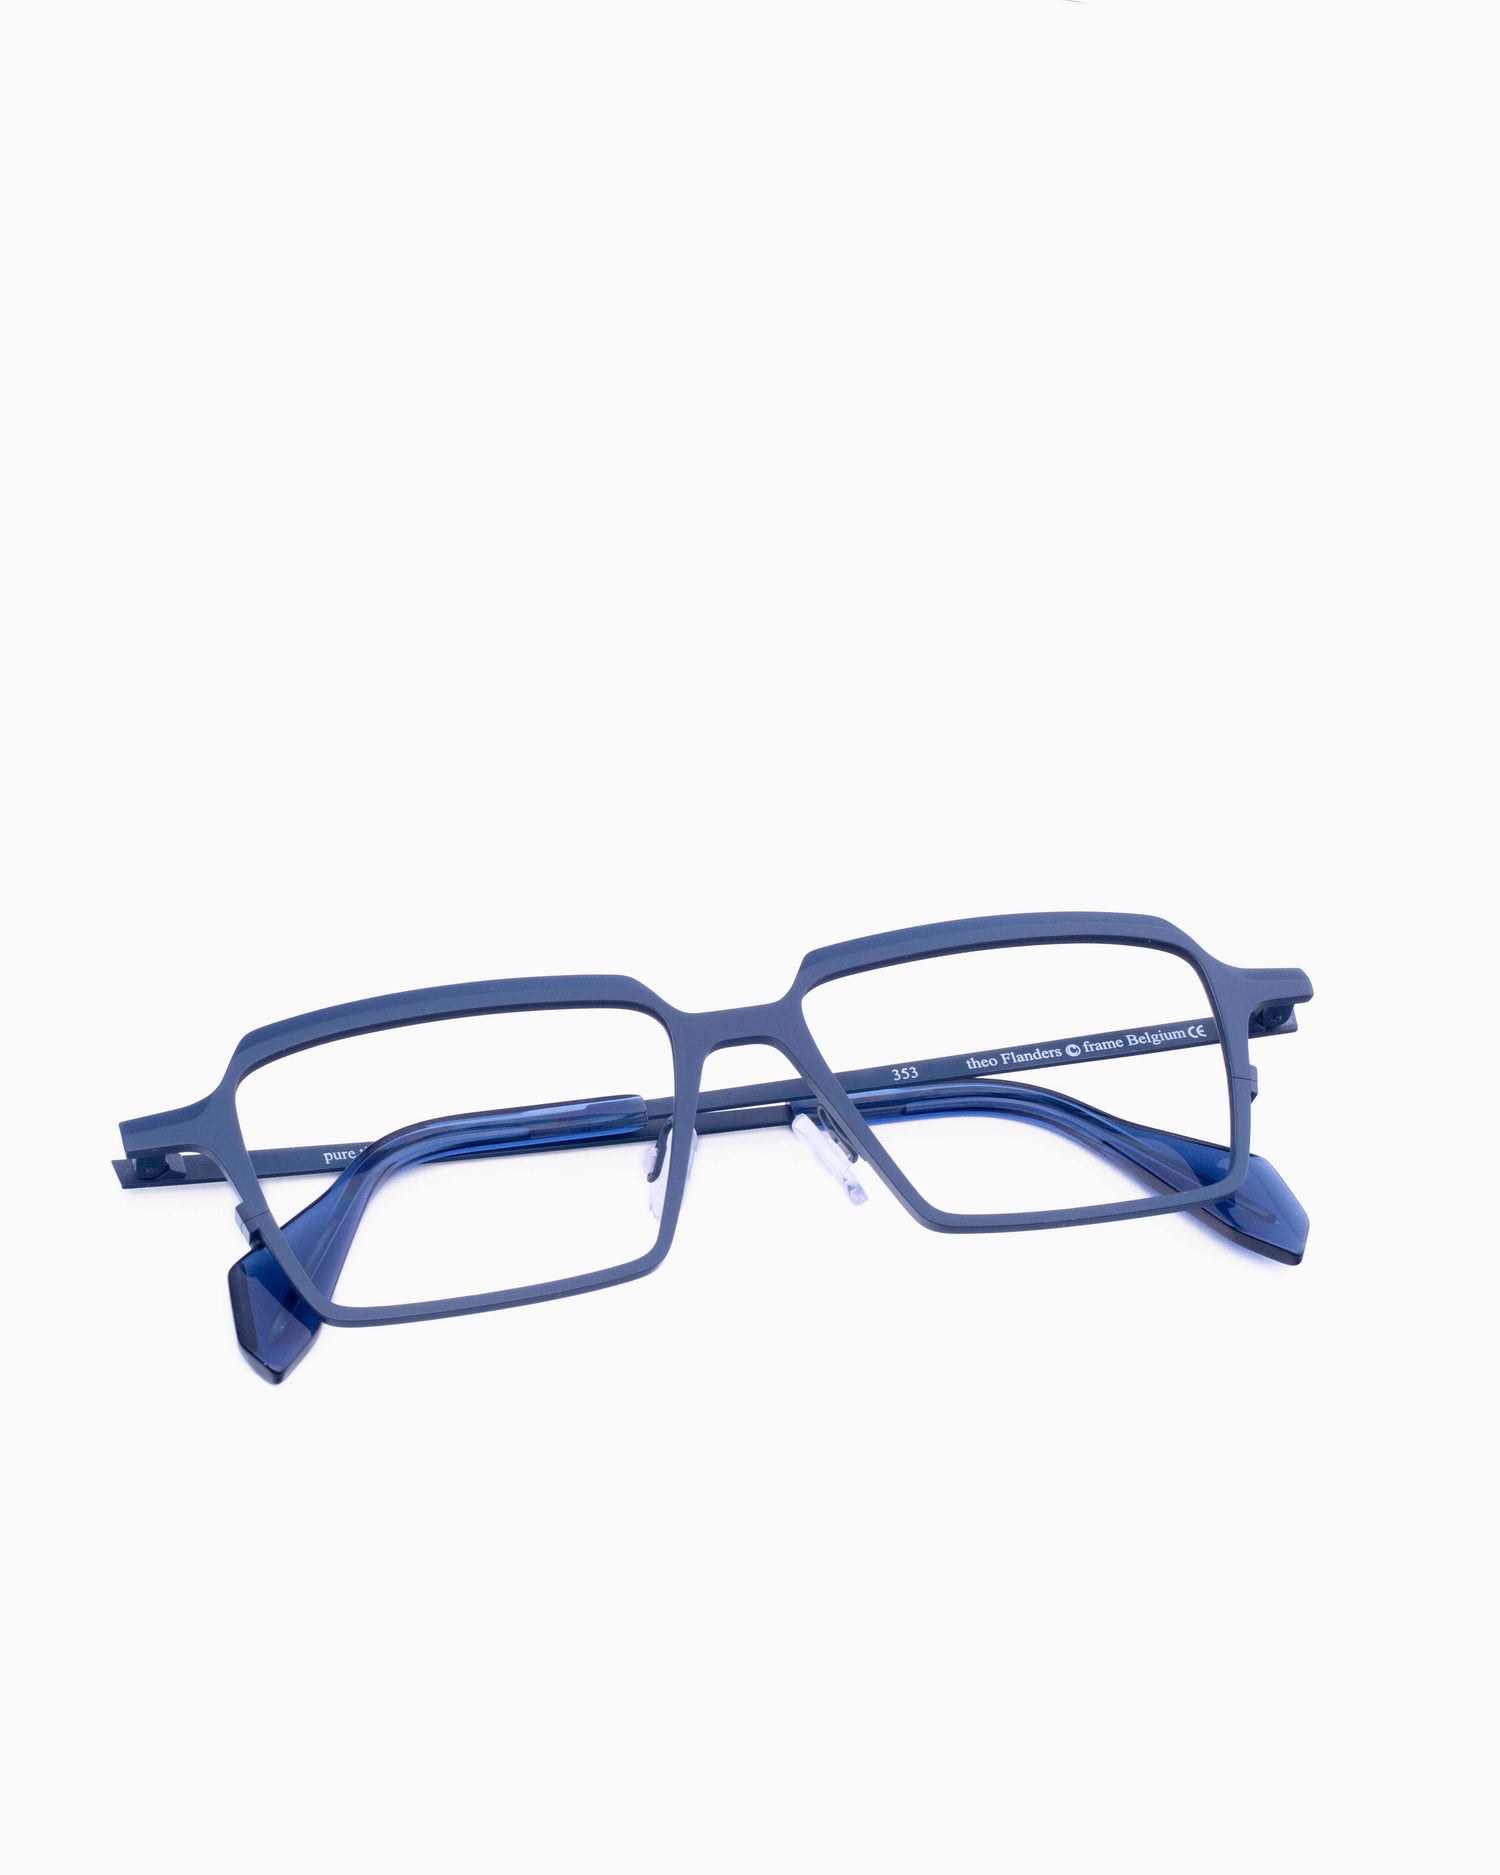 Theo - Flanders - 353 | glasses bar:  Marie-Sophie Dion